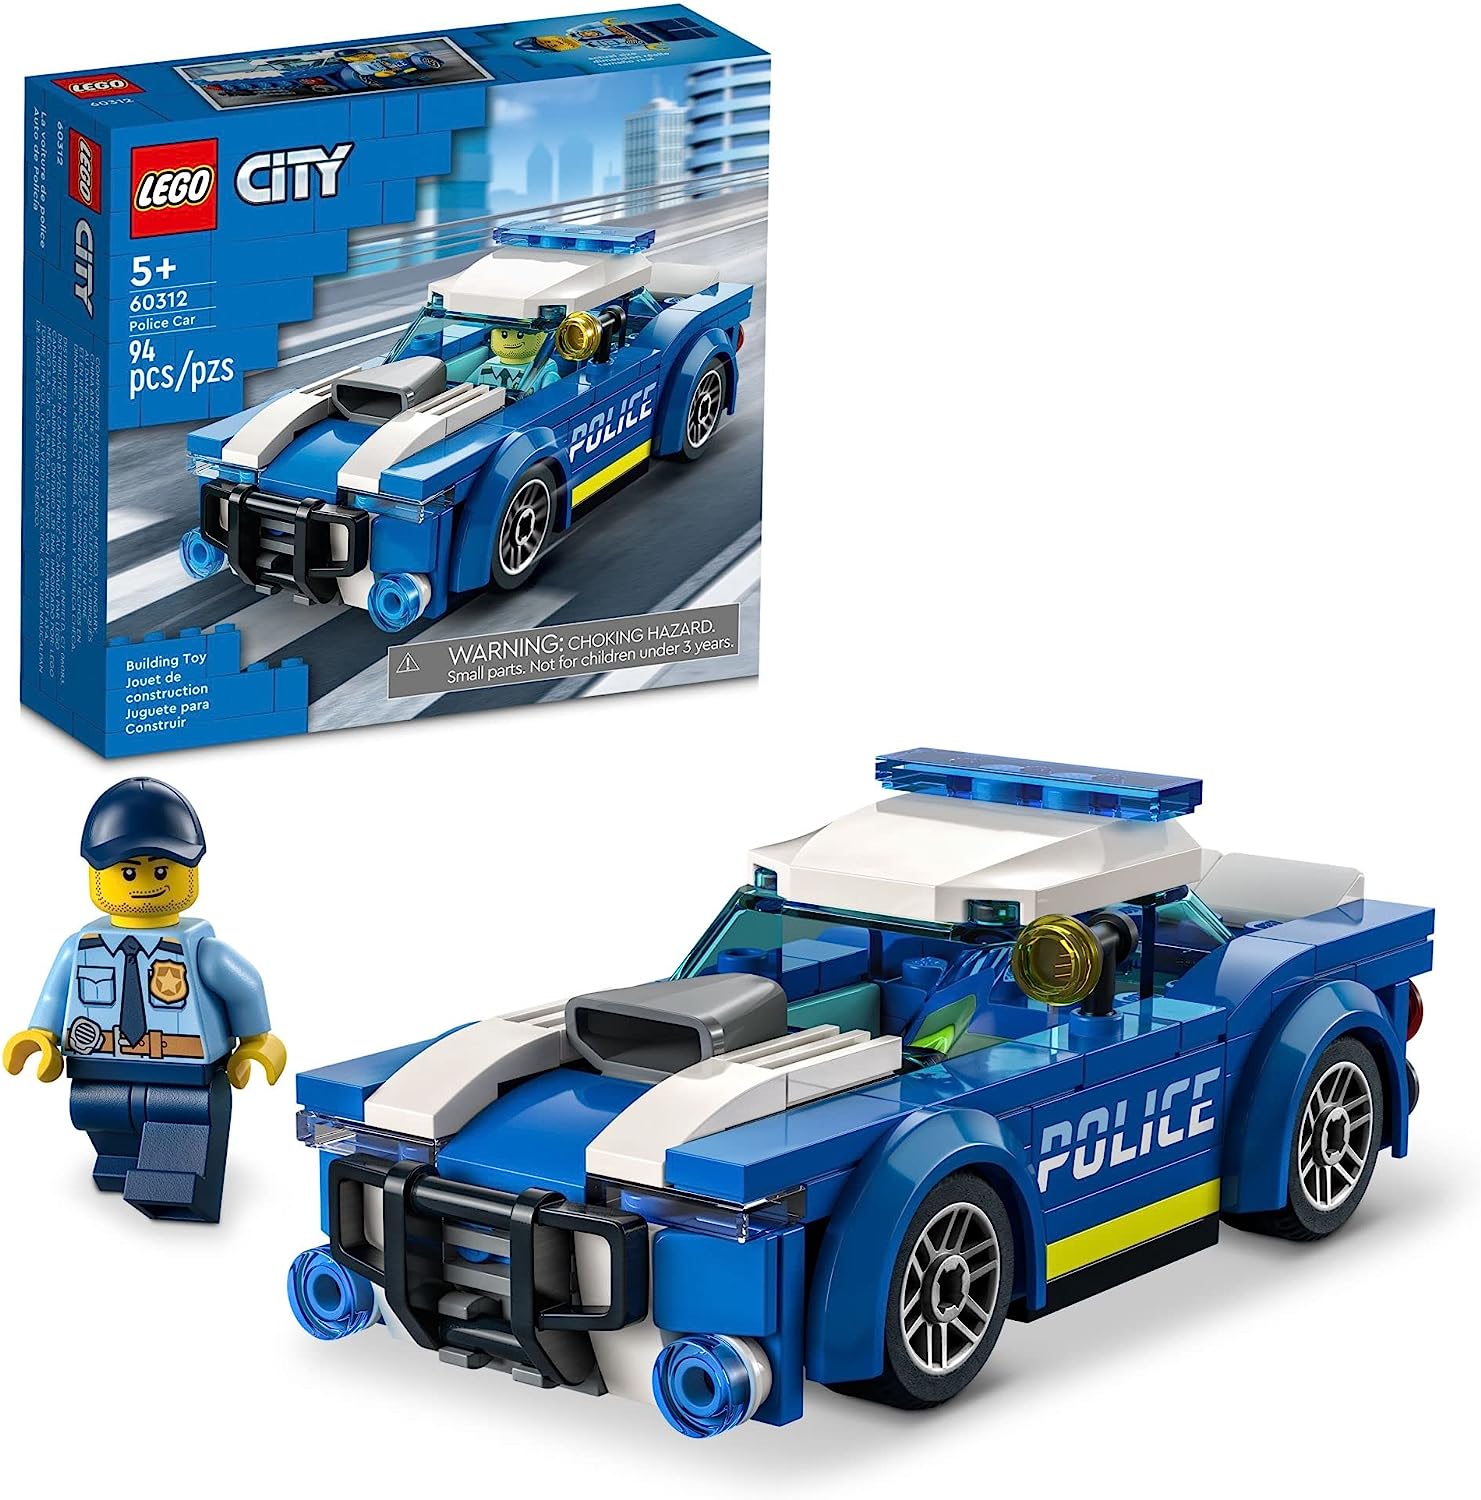 LEGO City Police Car Set (60312)